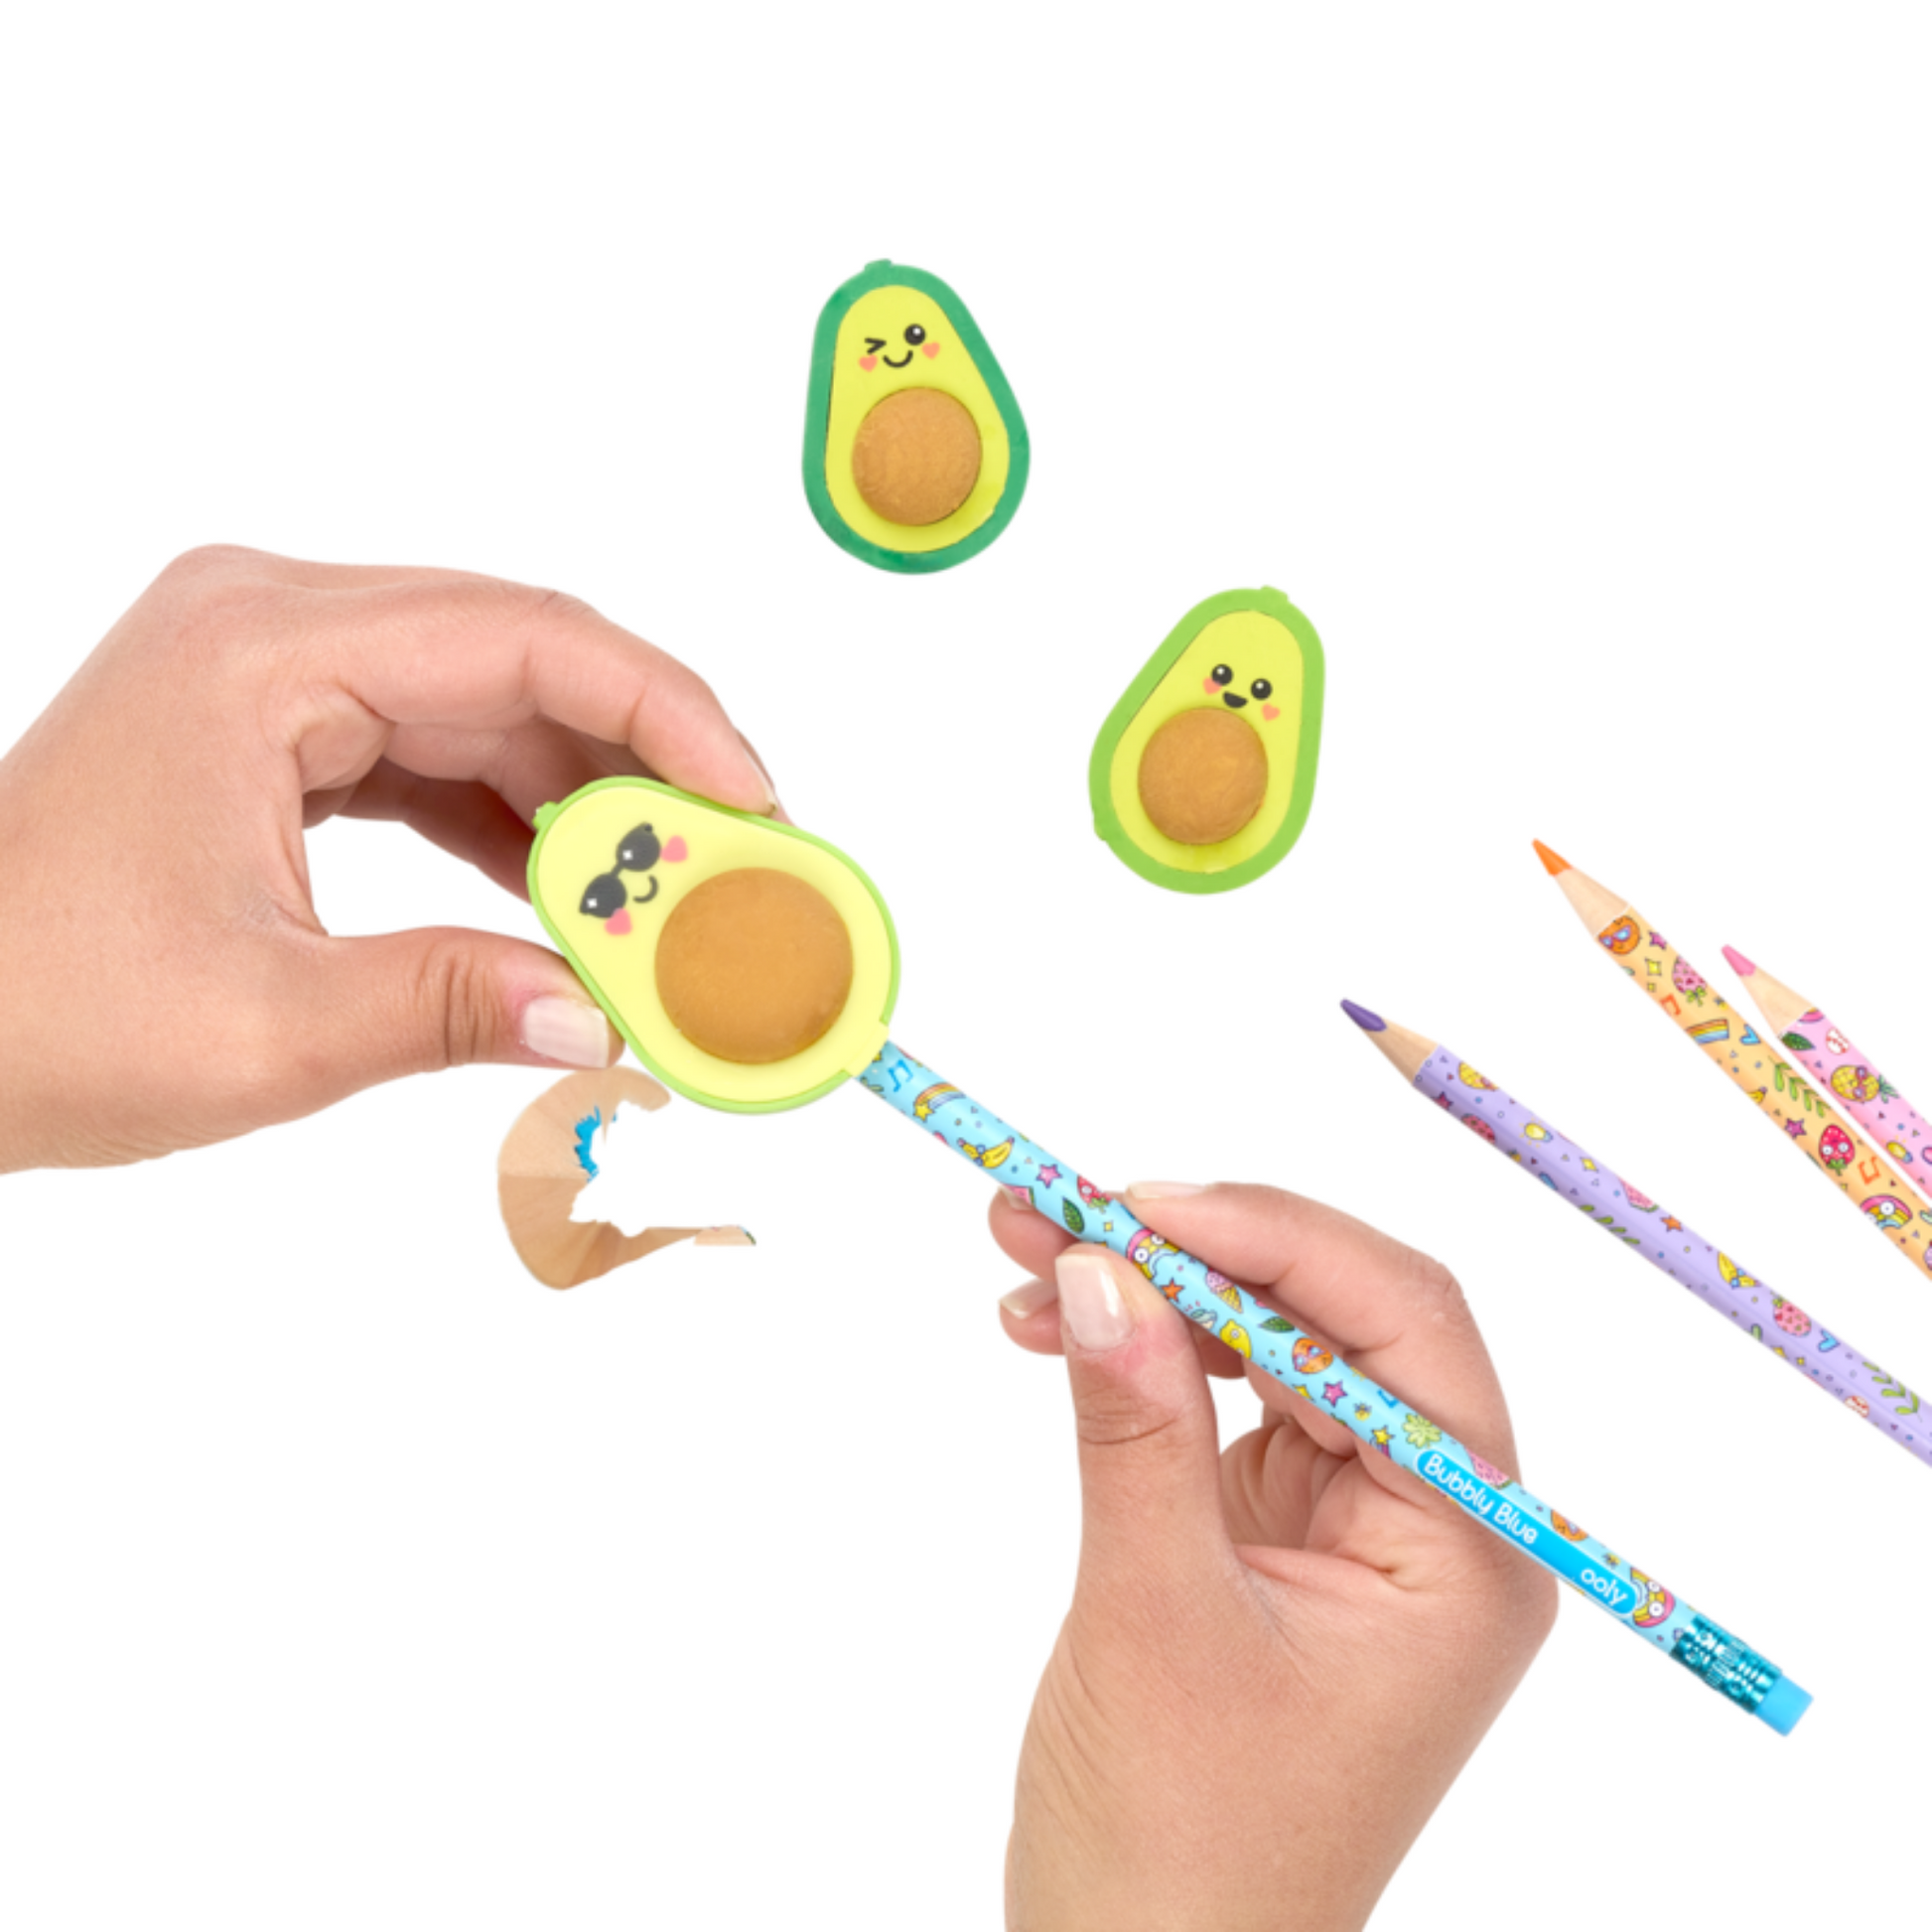 avocado eraser and sharpener stationery set